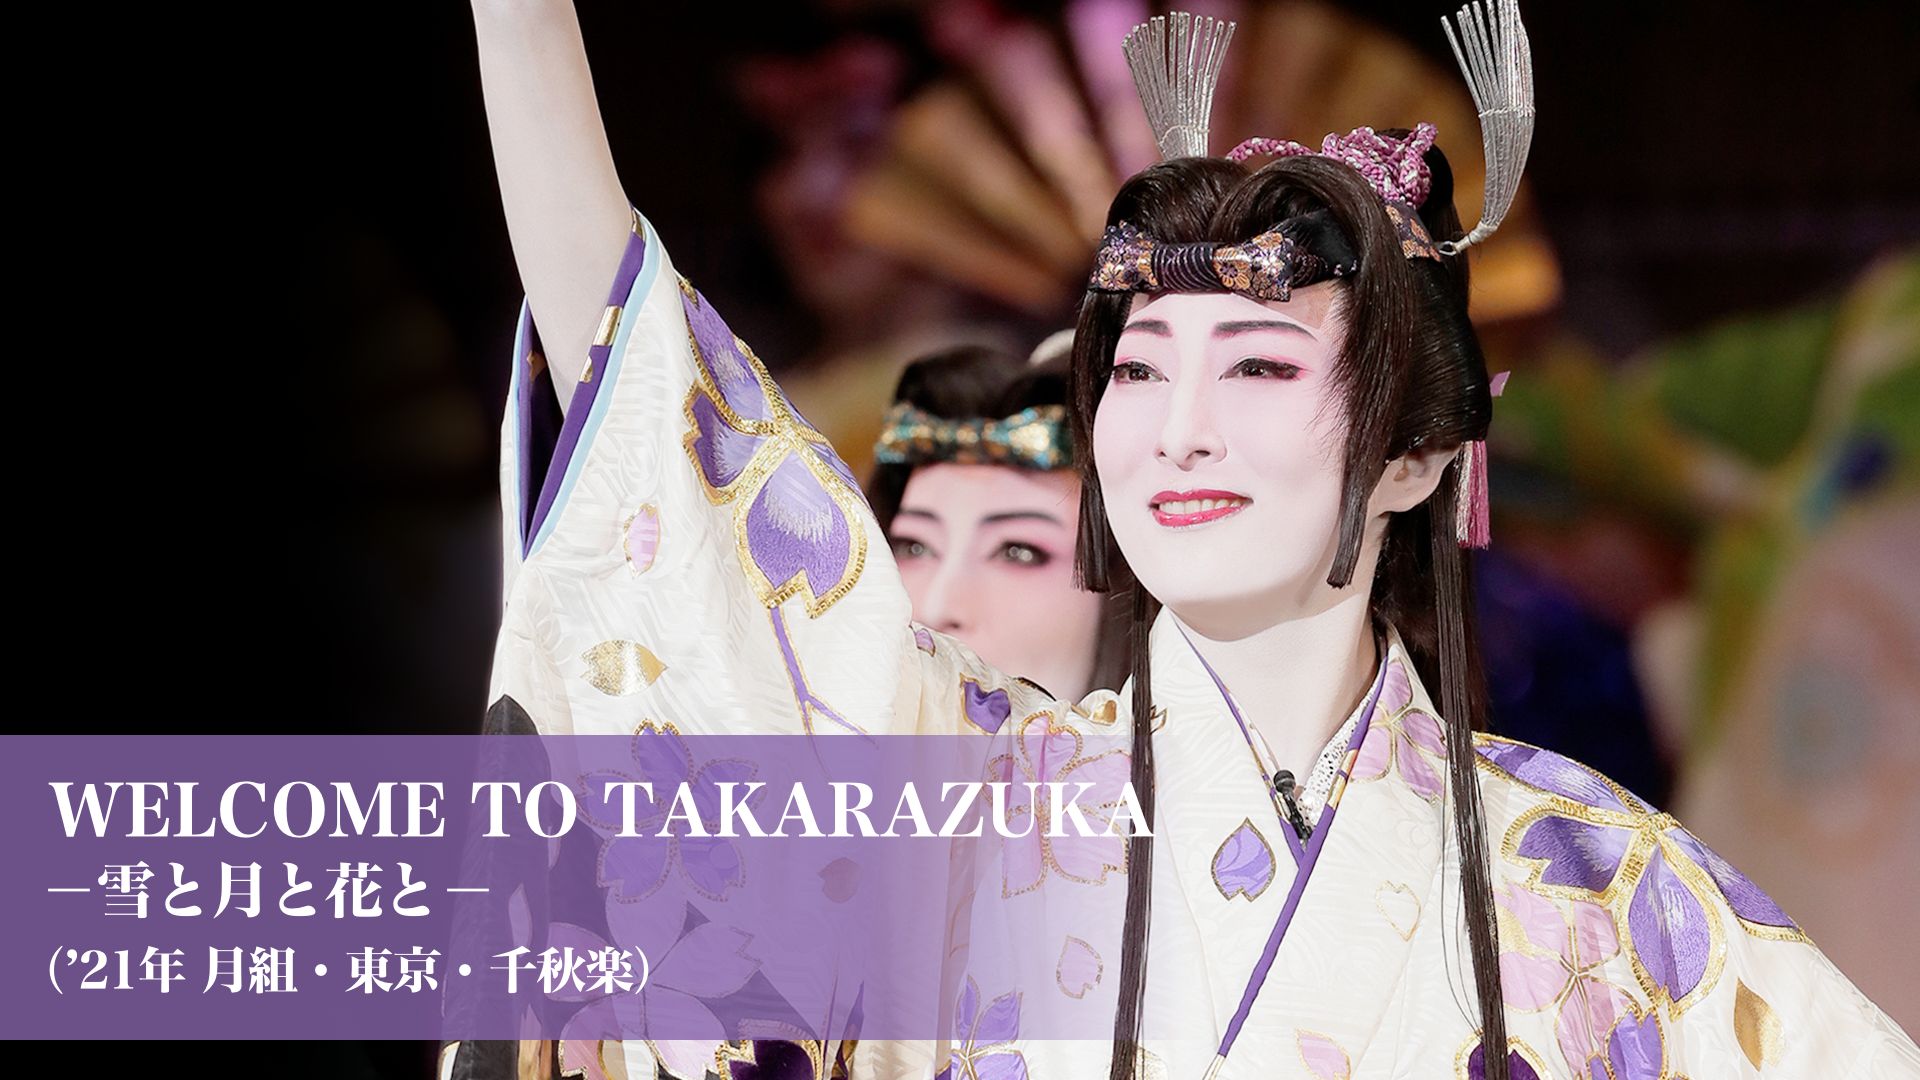 WELCOME TO TAKARAZUKA -雪と月と花と-('21年月組・東京・千秋楽)